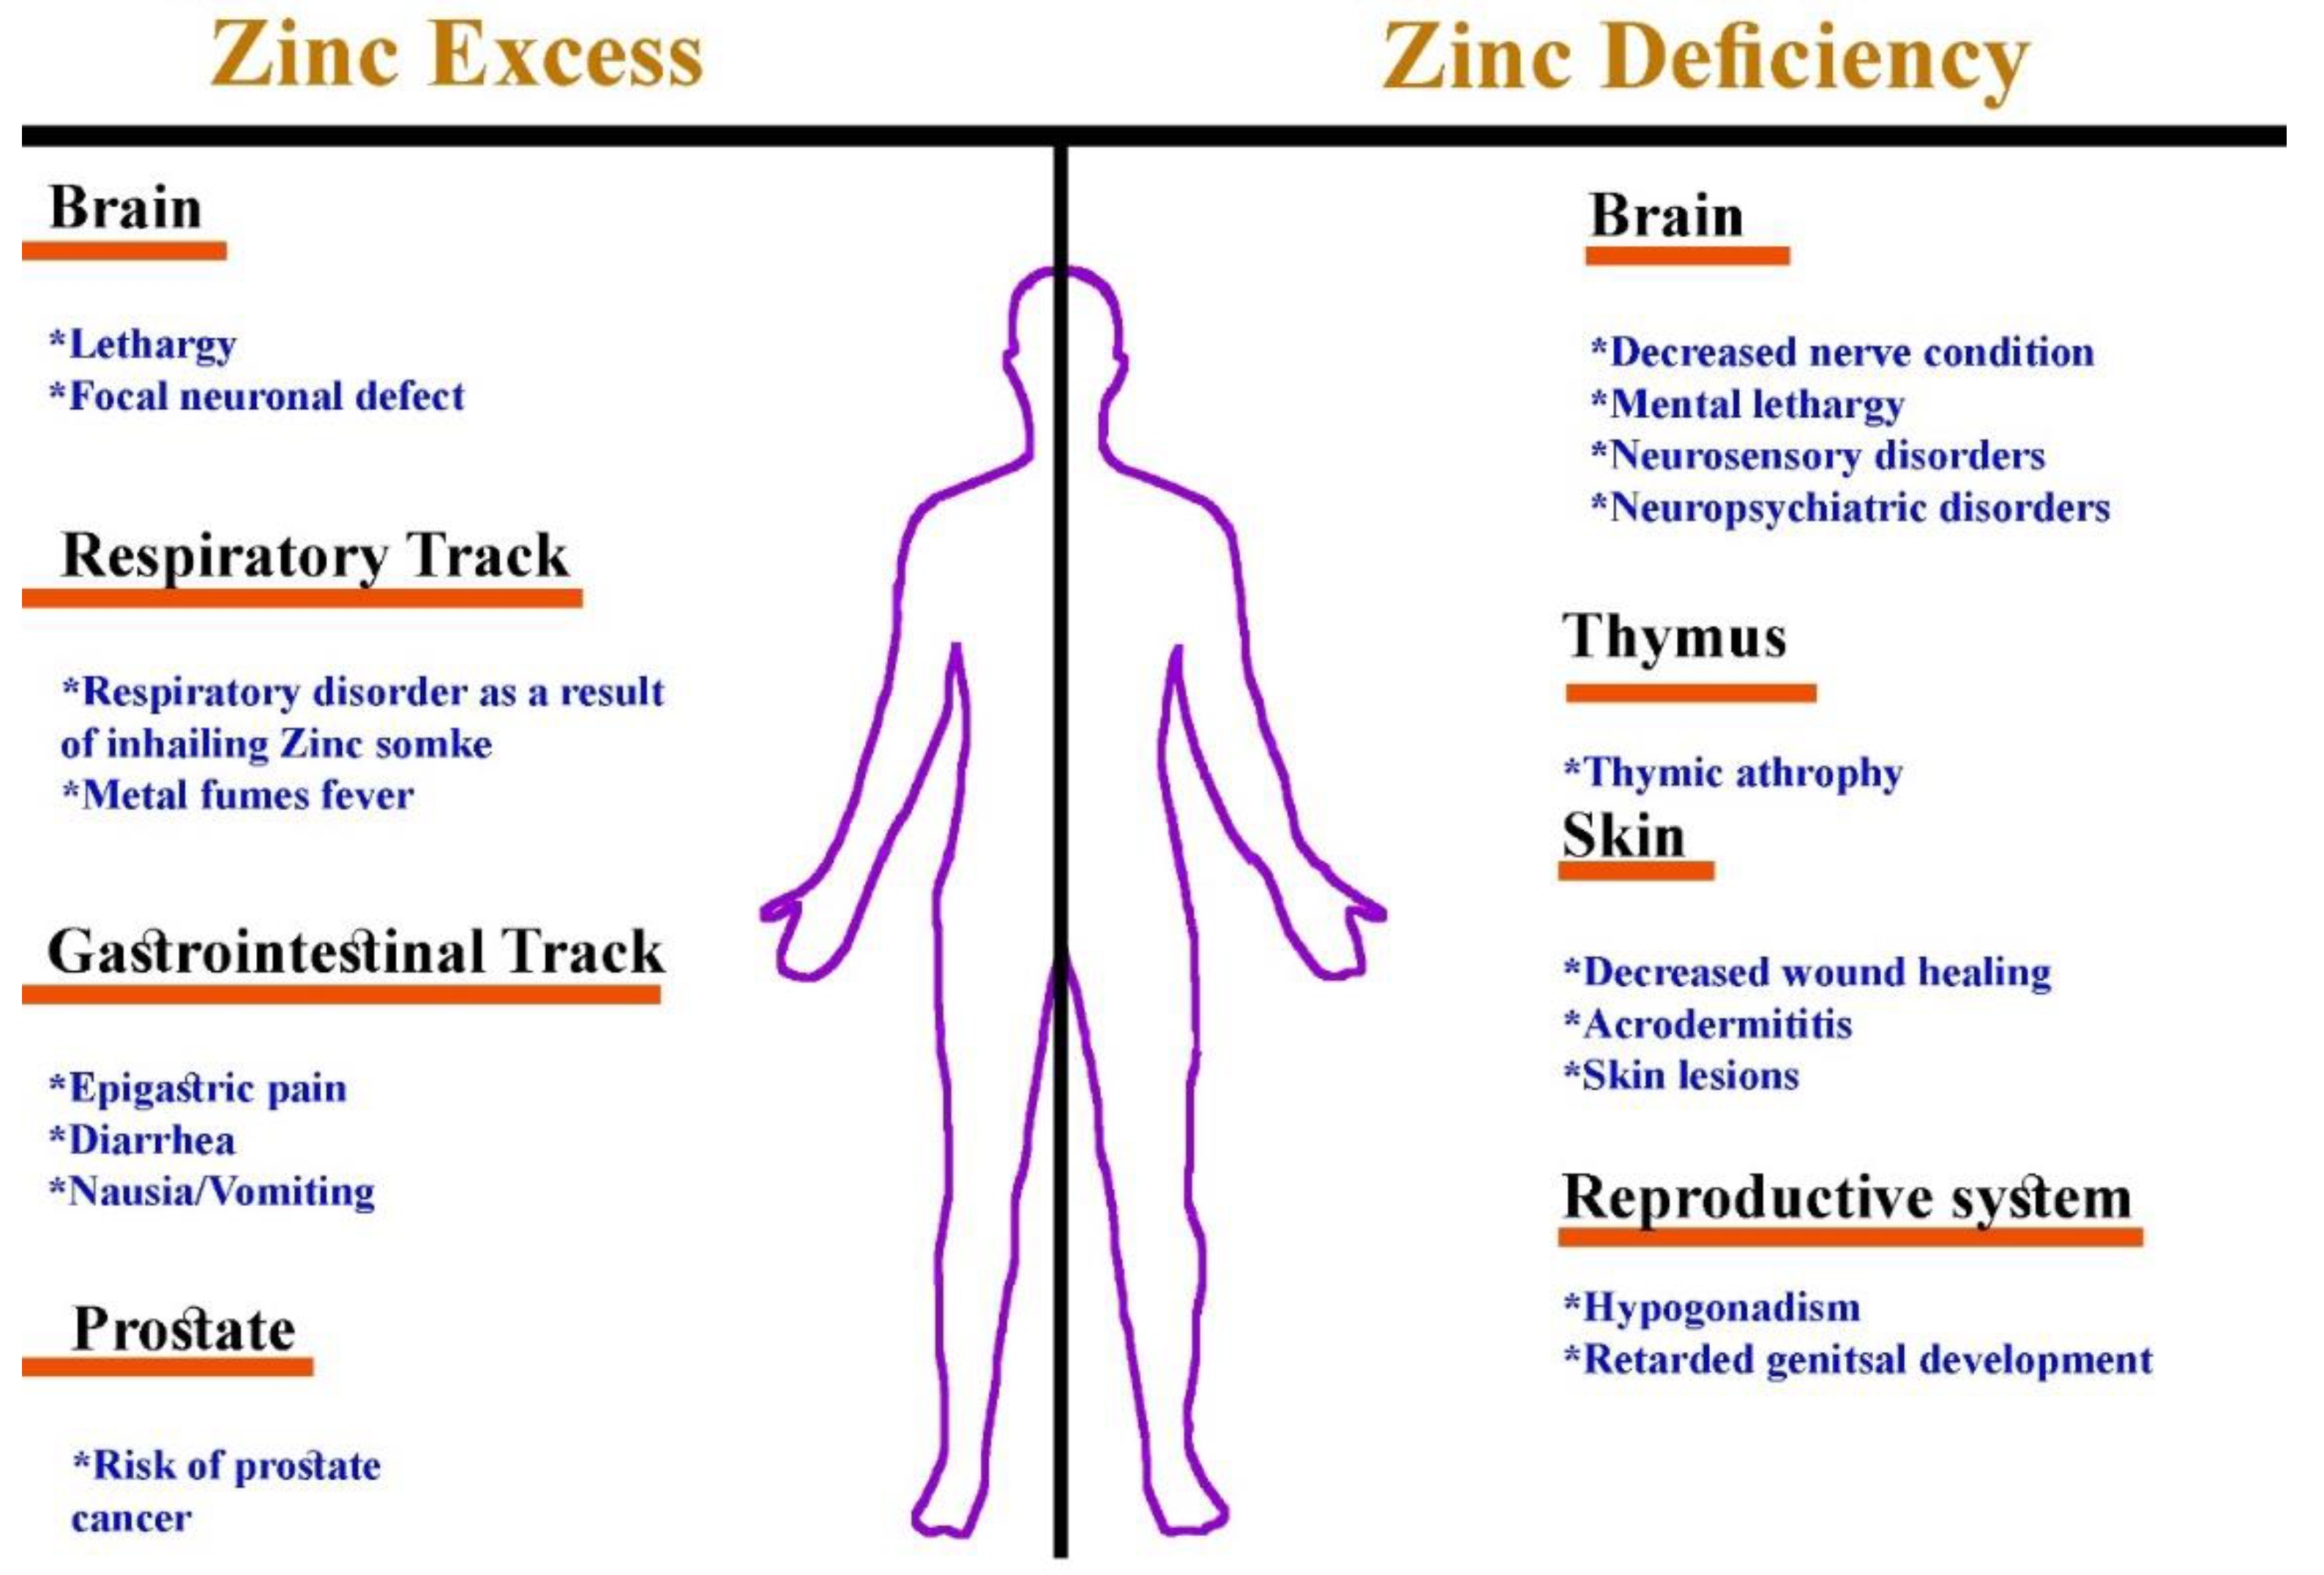 zinc deficiency acrodermatitis enteropathica